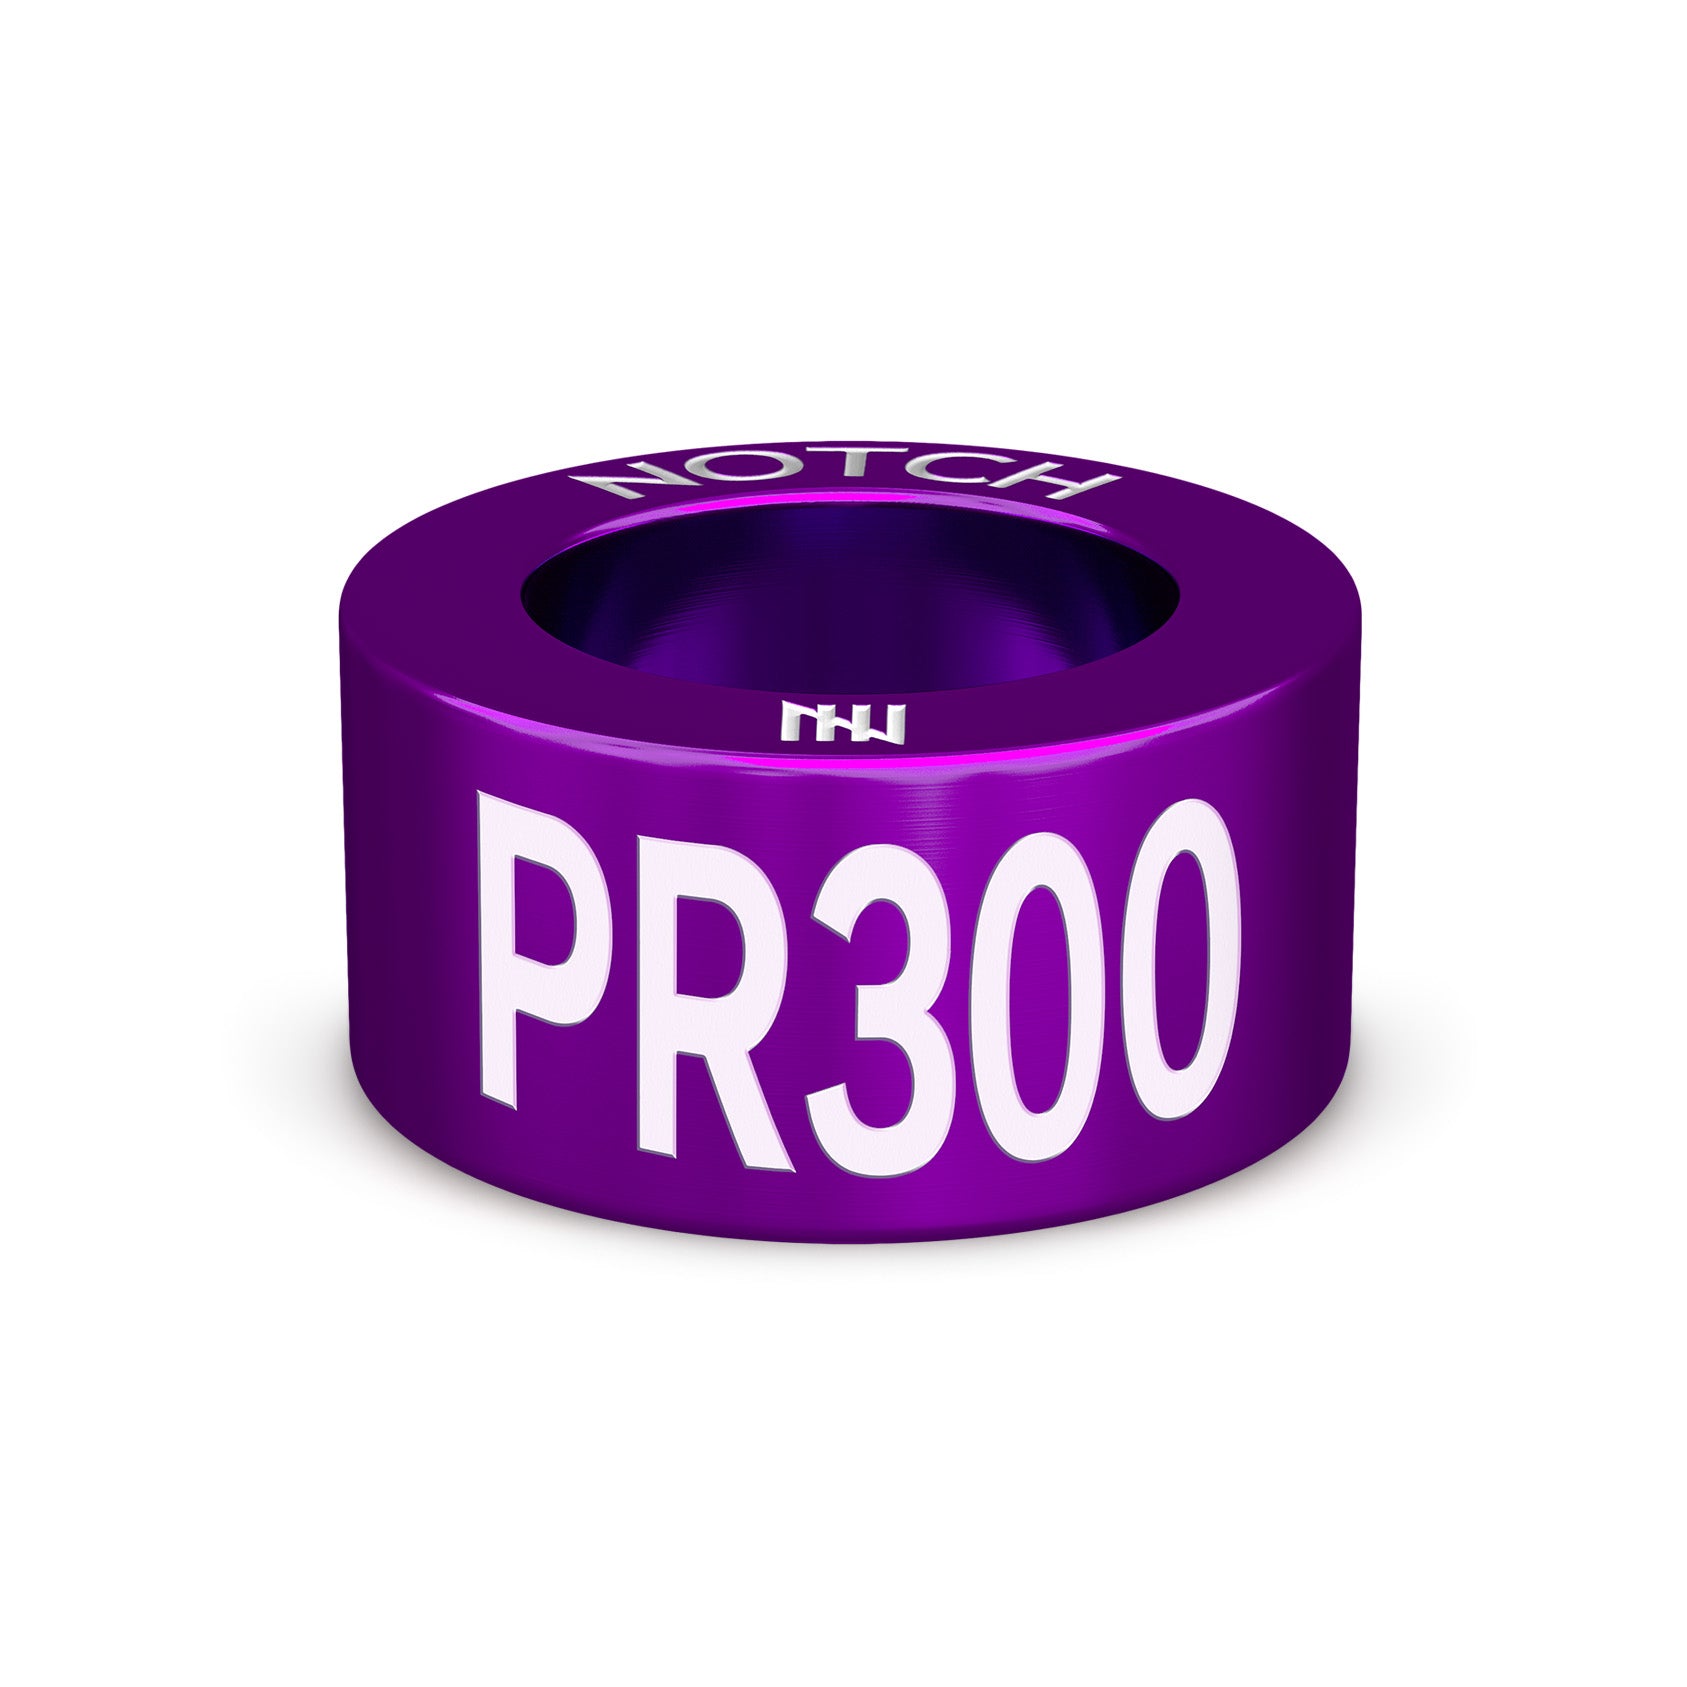 PR300 Milestone NOTCH Charm